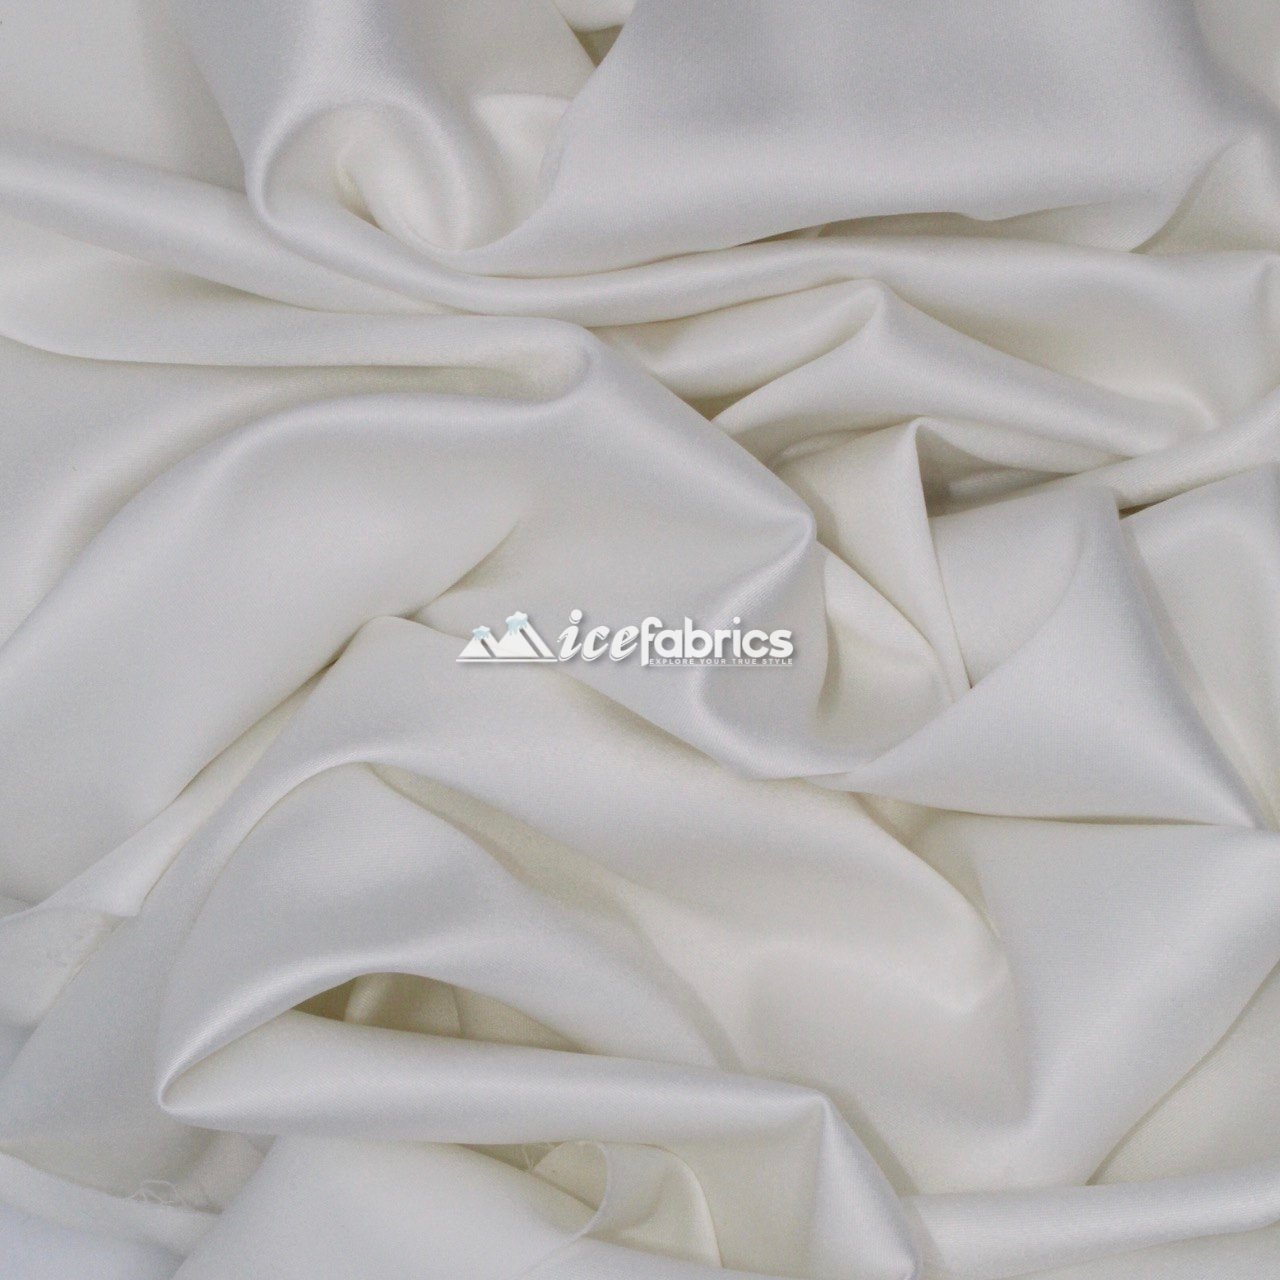 Armani Silk Fabric/ Thick Stretch Satin Fabric/ Spandex Fabric/ WhiteSatin FabricICEFABRICICE FABRICSWhitePer YardArmani Silk Fabric/ Thick Stretch Satin Fabric/ Spandex Fabric/ White ICEFABRIC